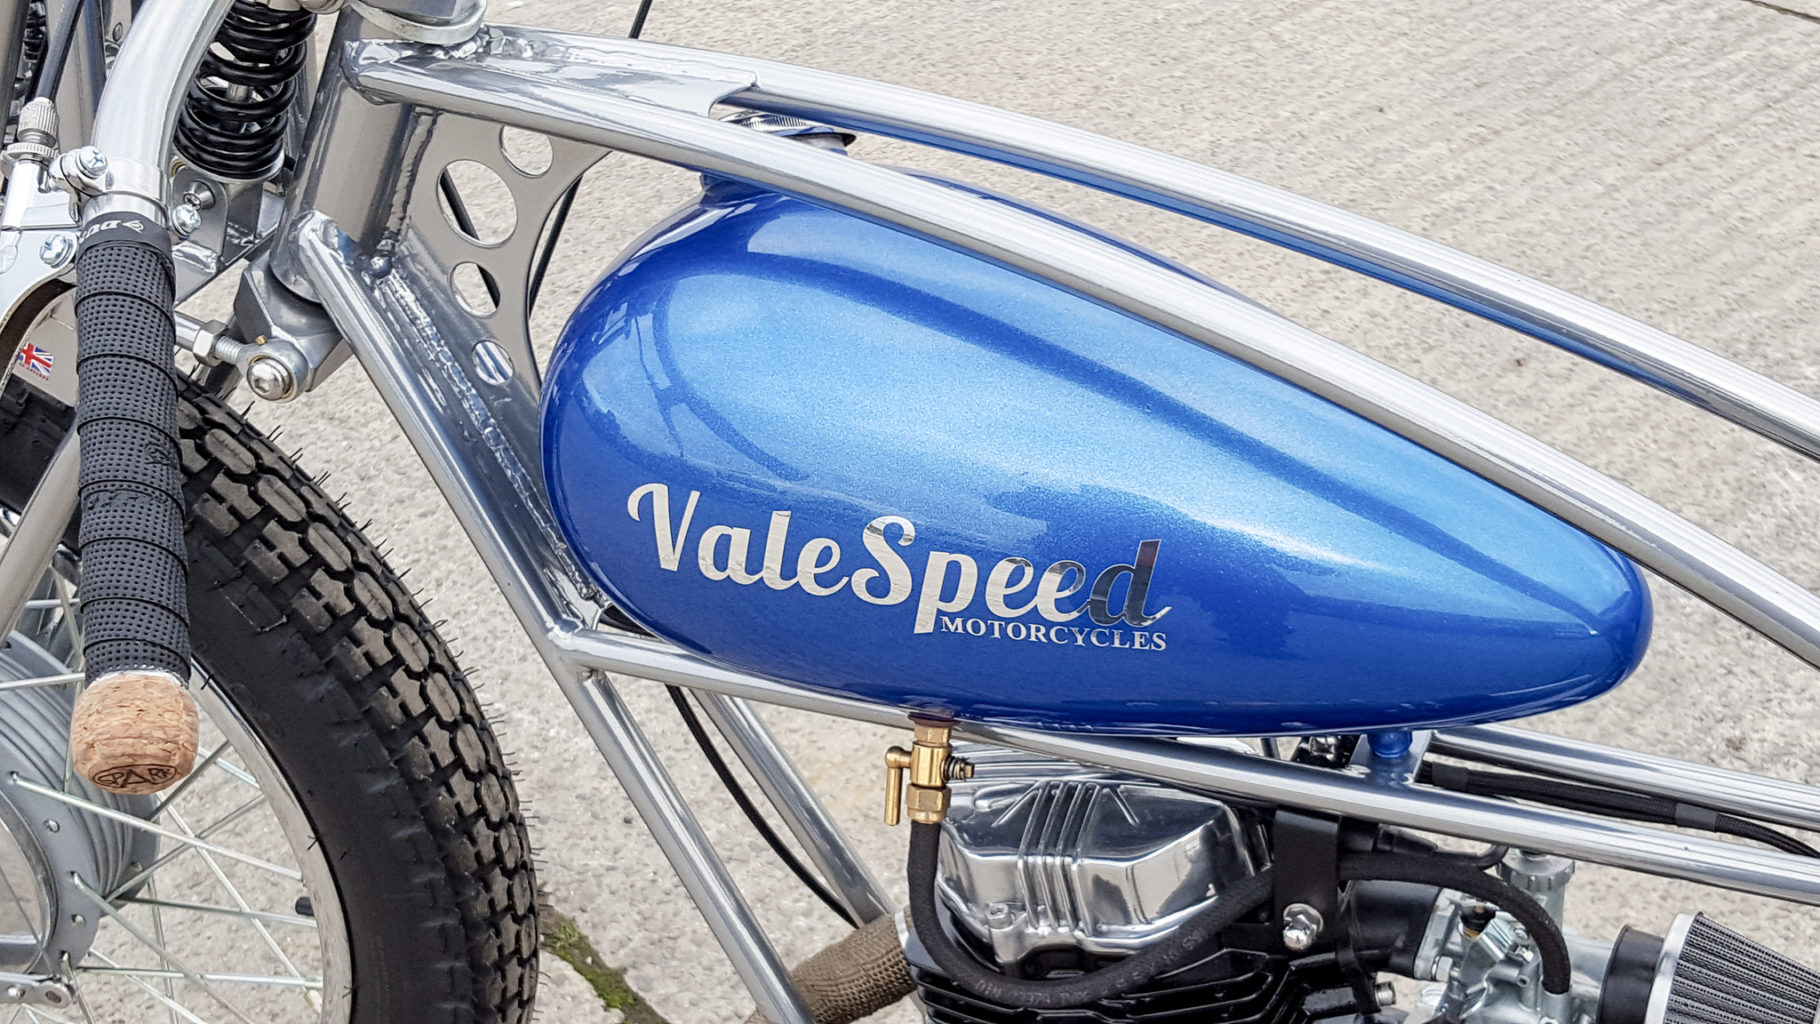 "Valespeed 28" from Valespeed Motorcycles